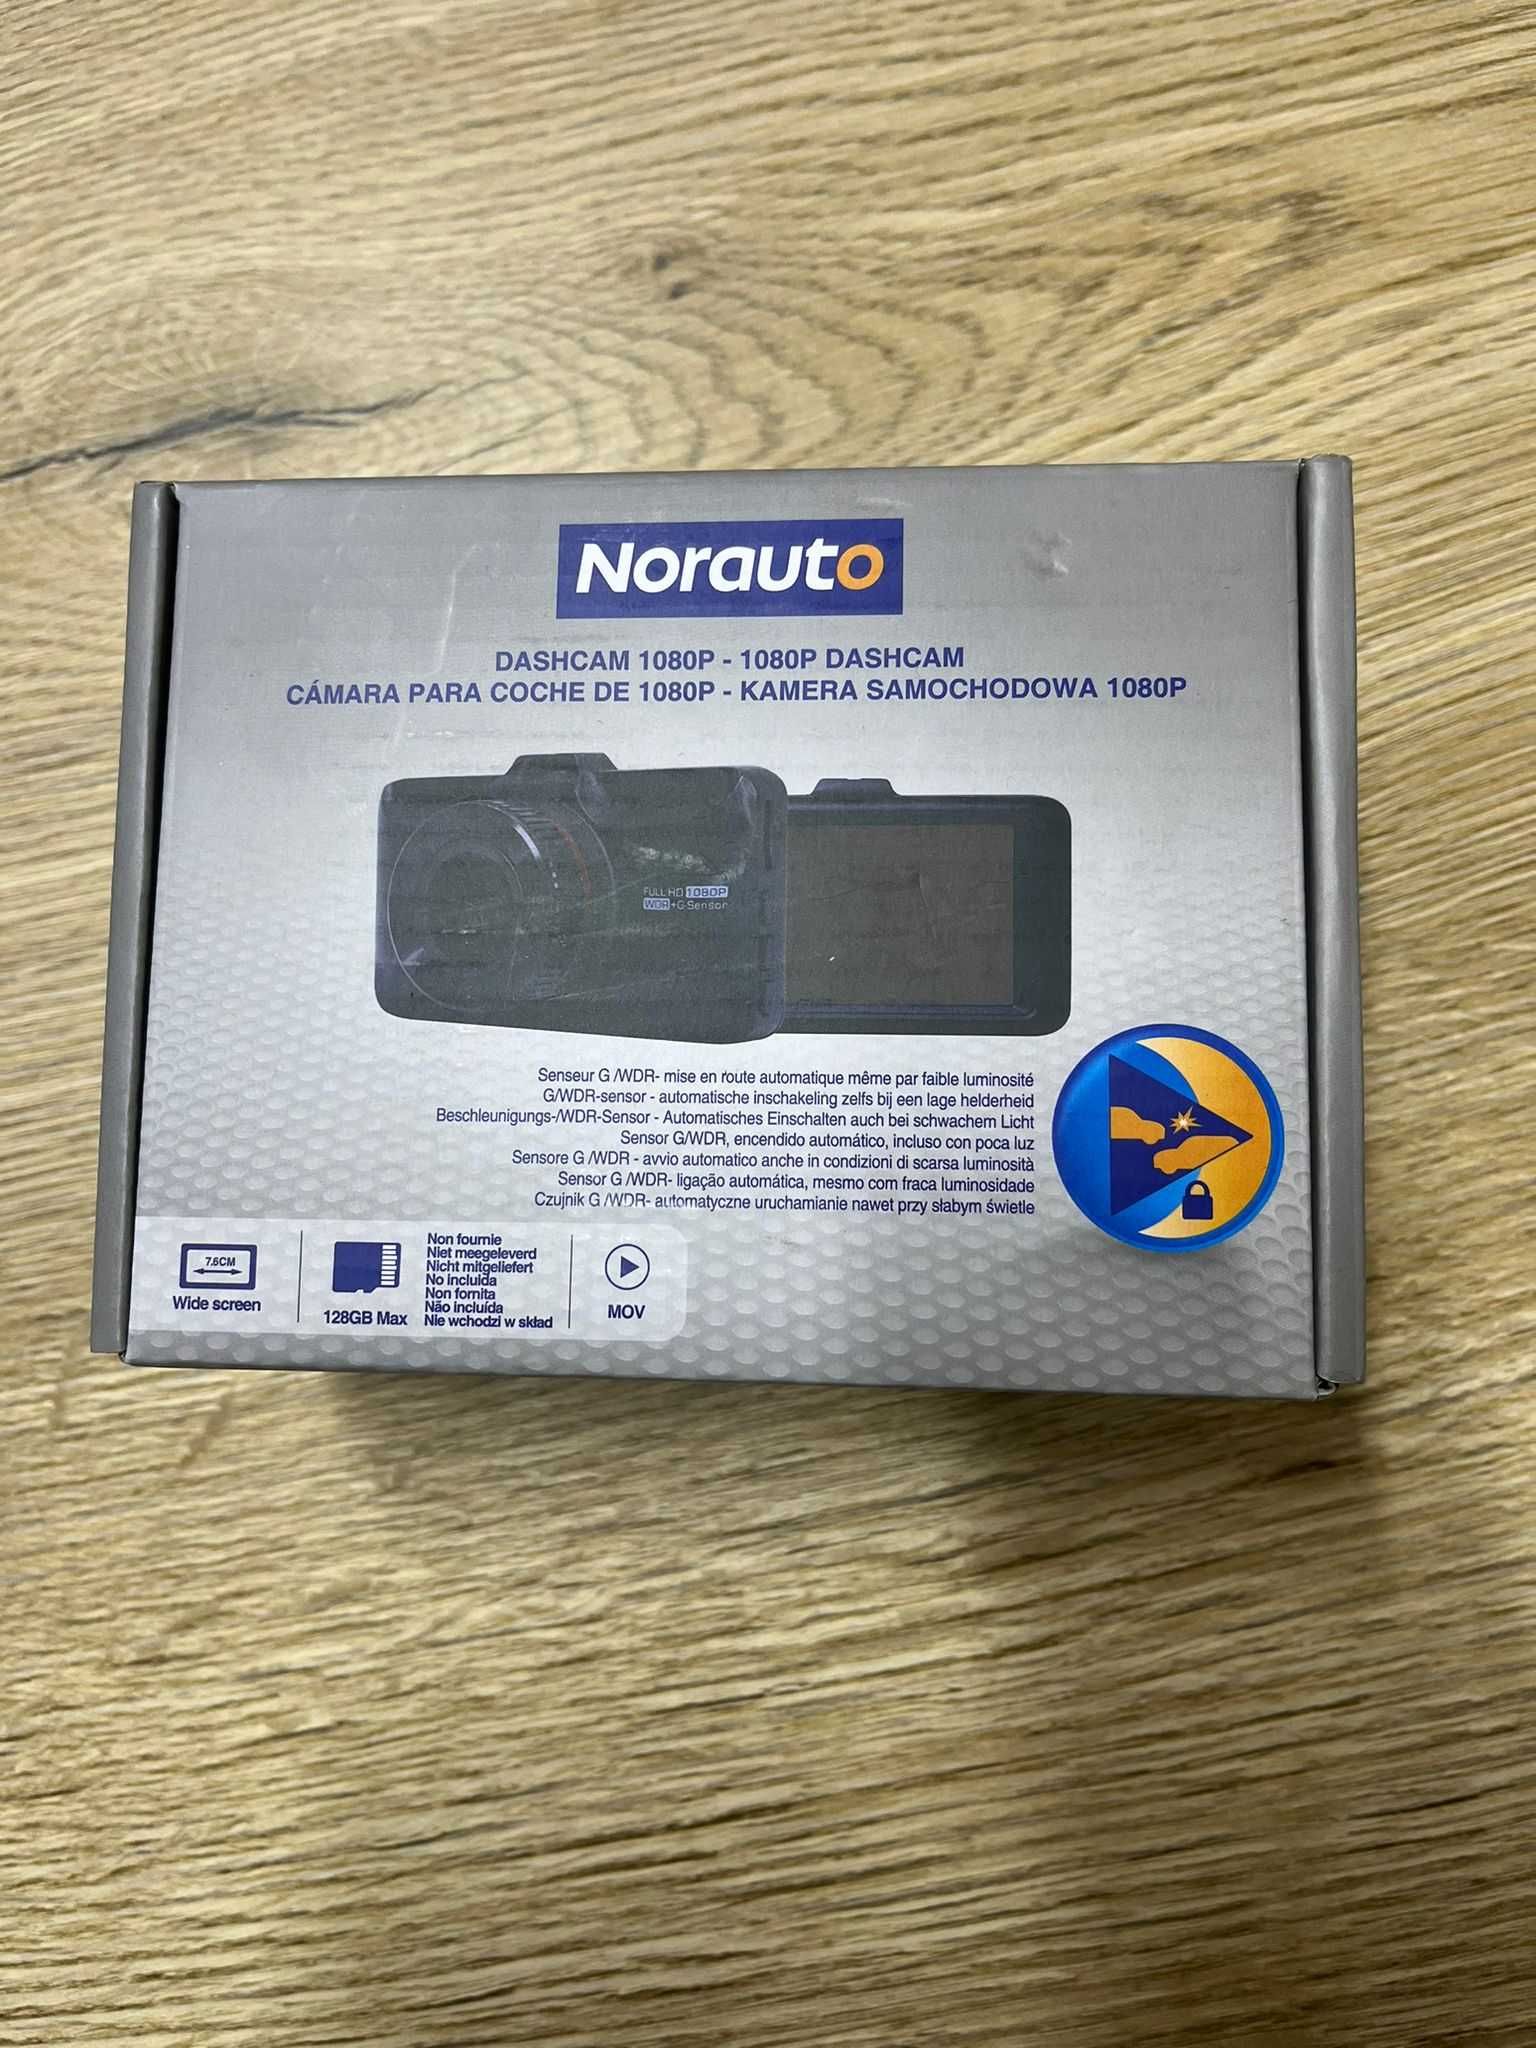 Norauto Dashcam 1080p